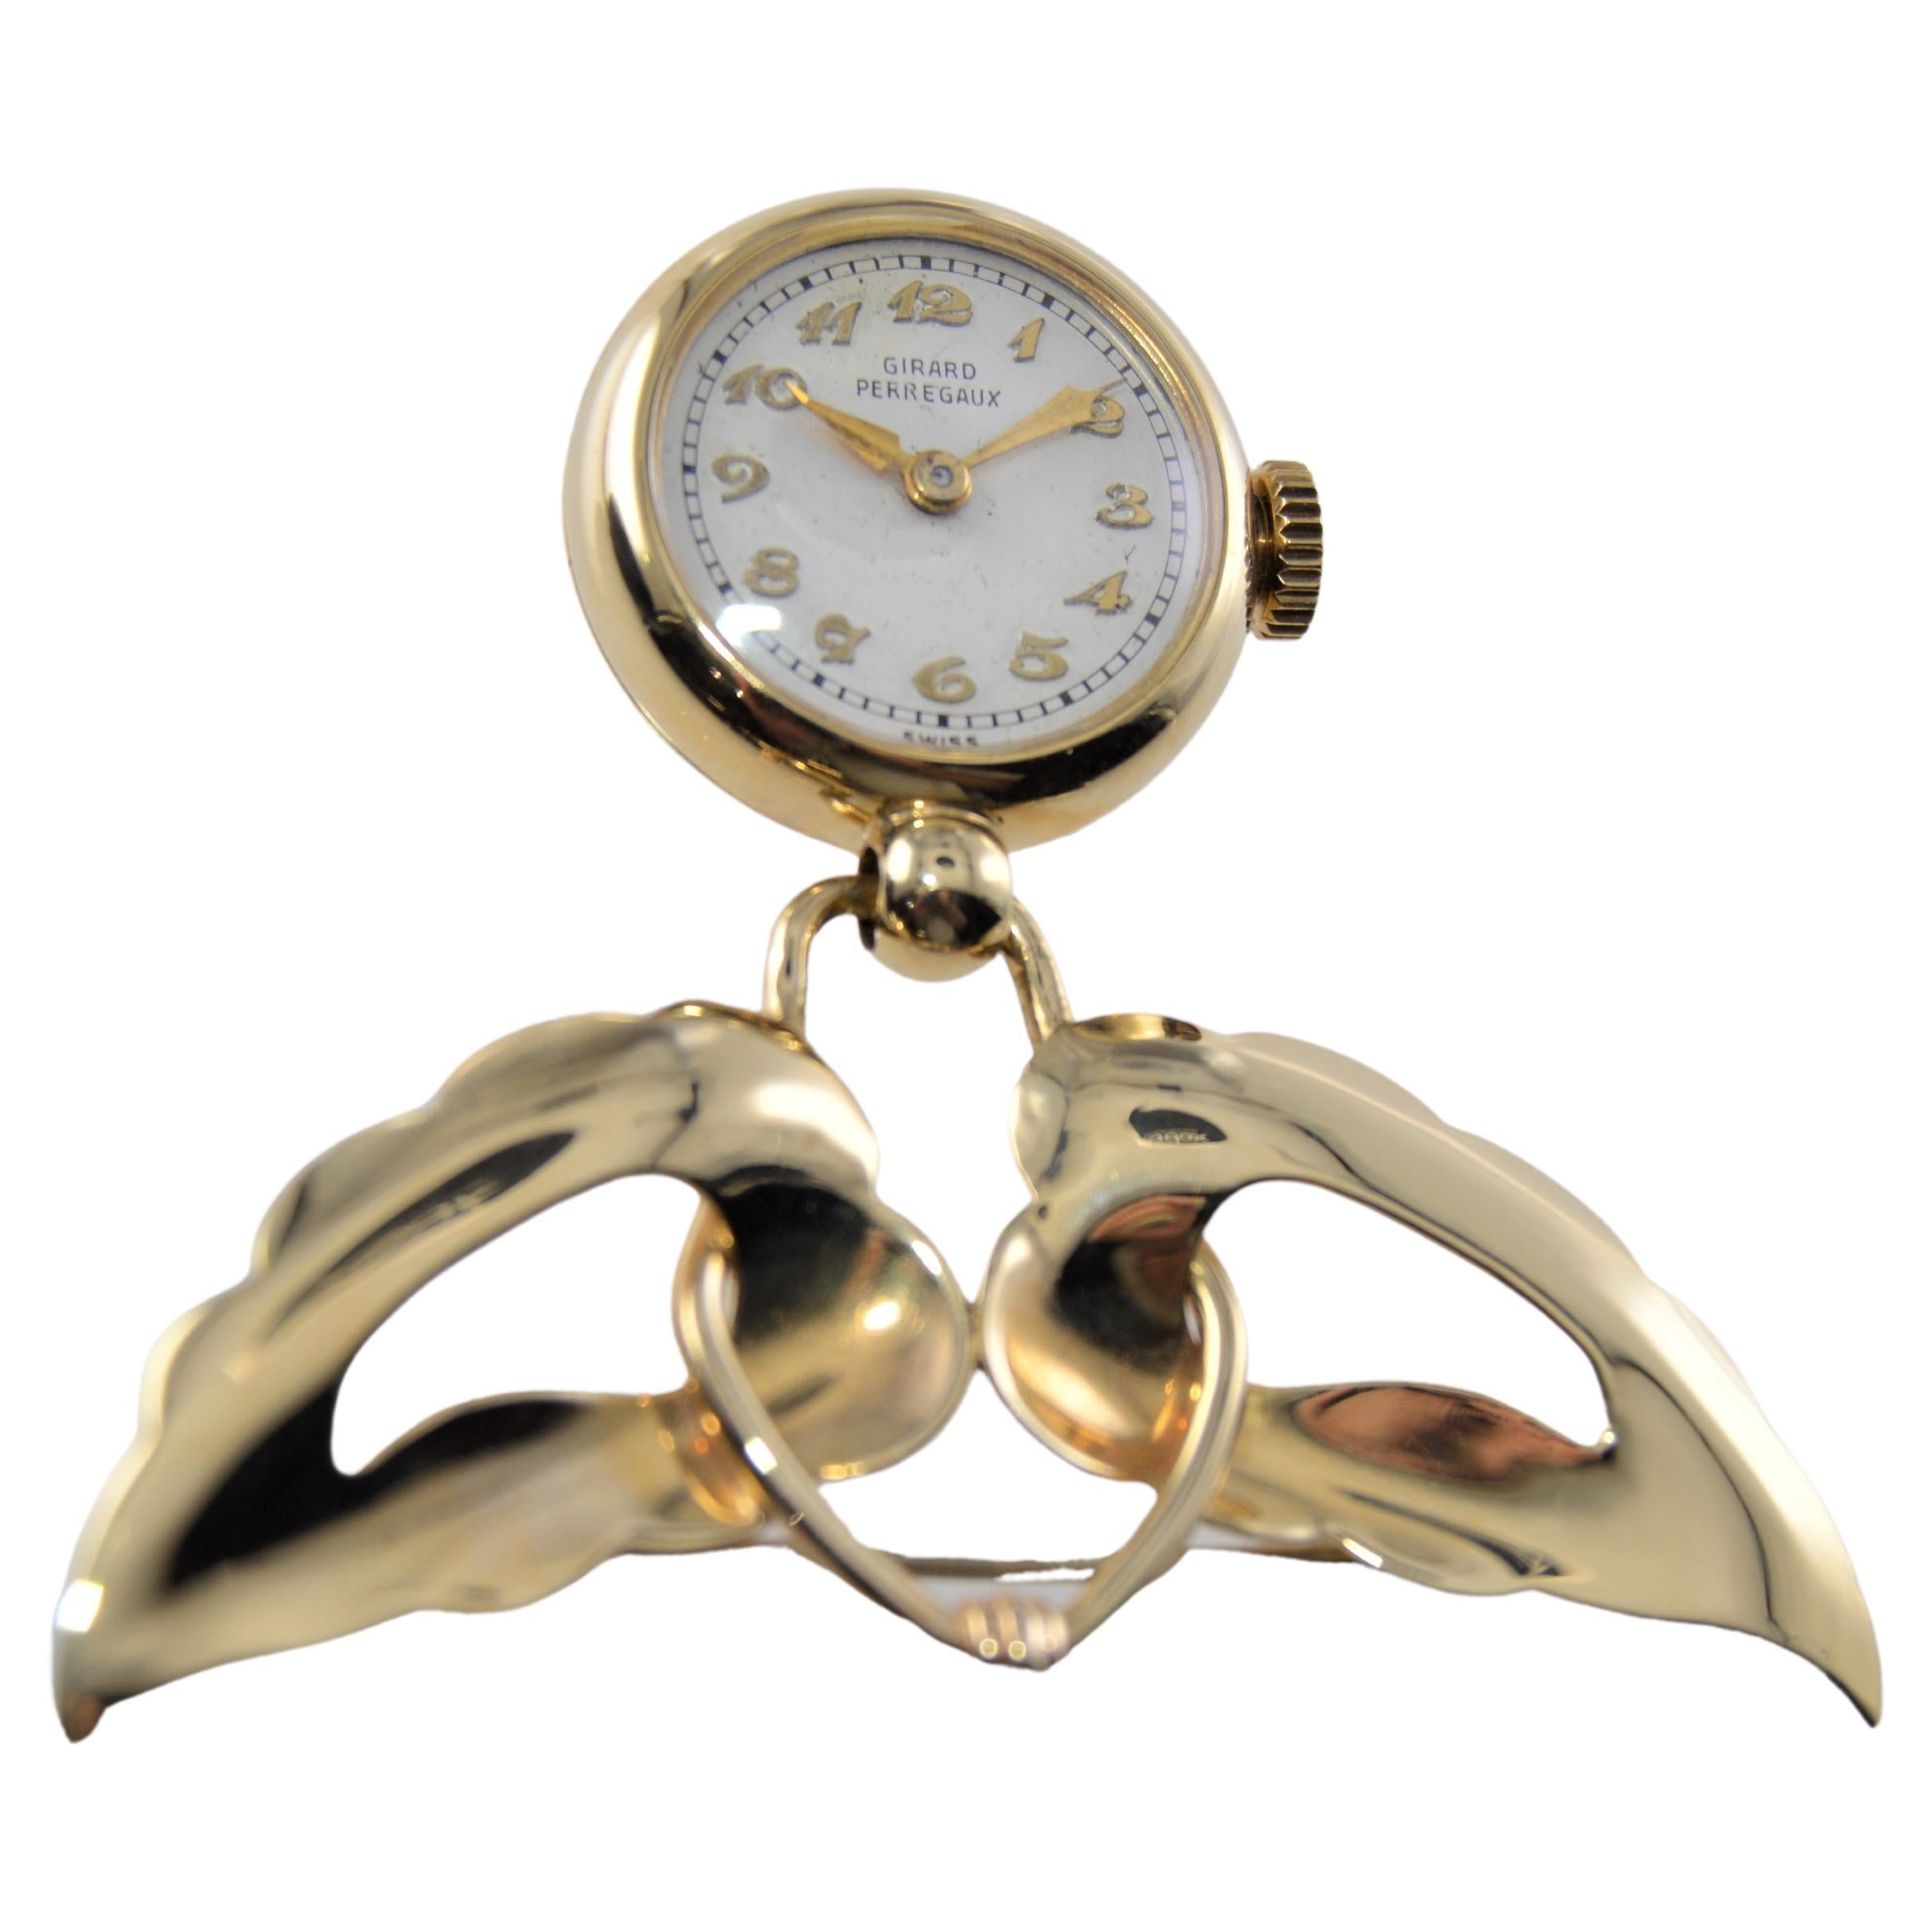 Girard Perregaux Solid Gold Art Deco Style Lapel Watch, circa 1950s